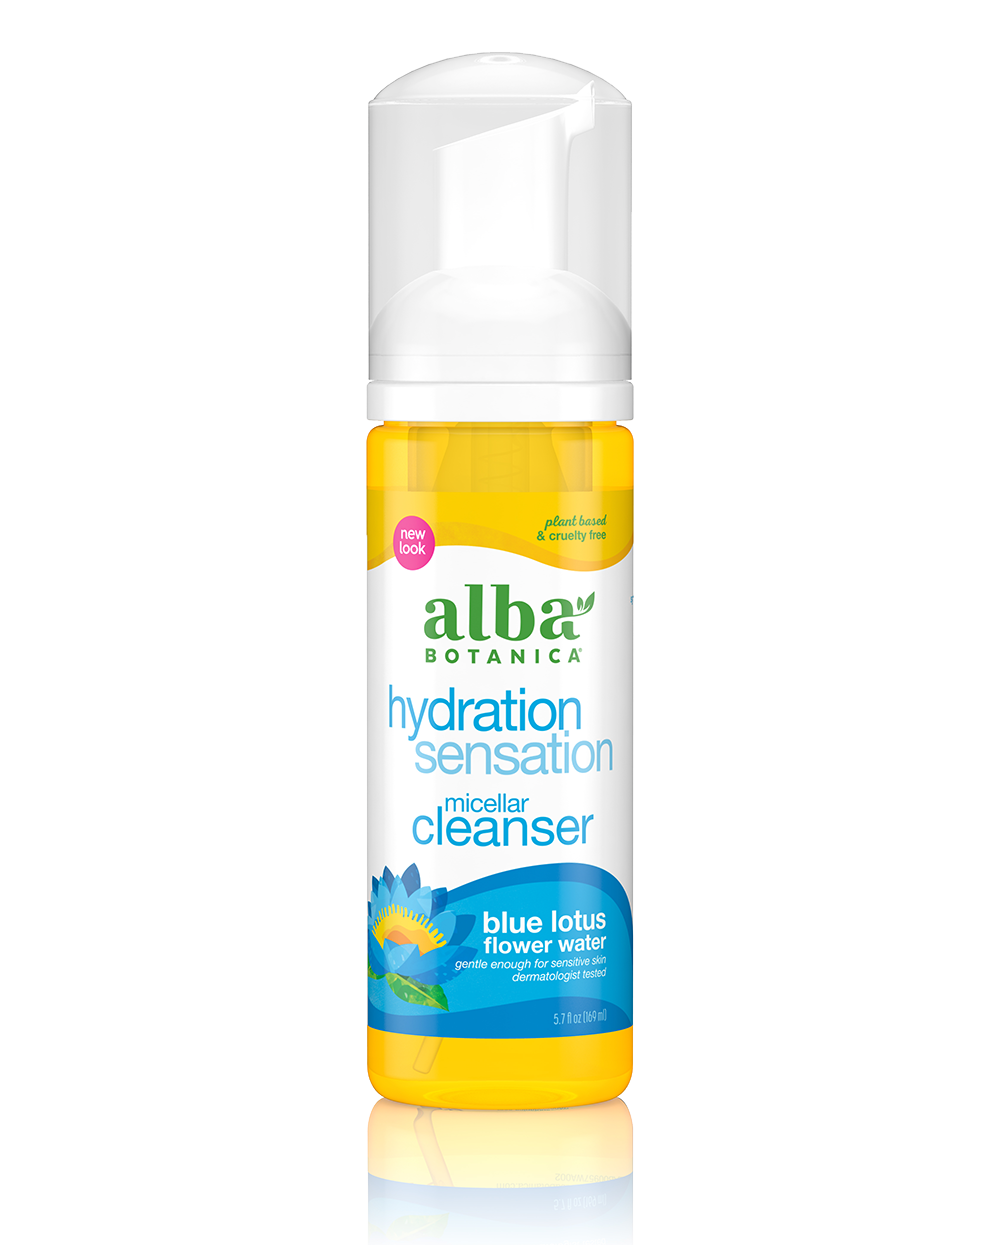 hydration sensation micellar cleanser